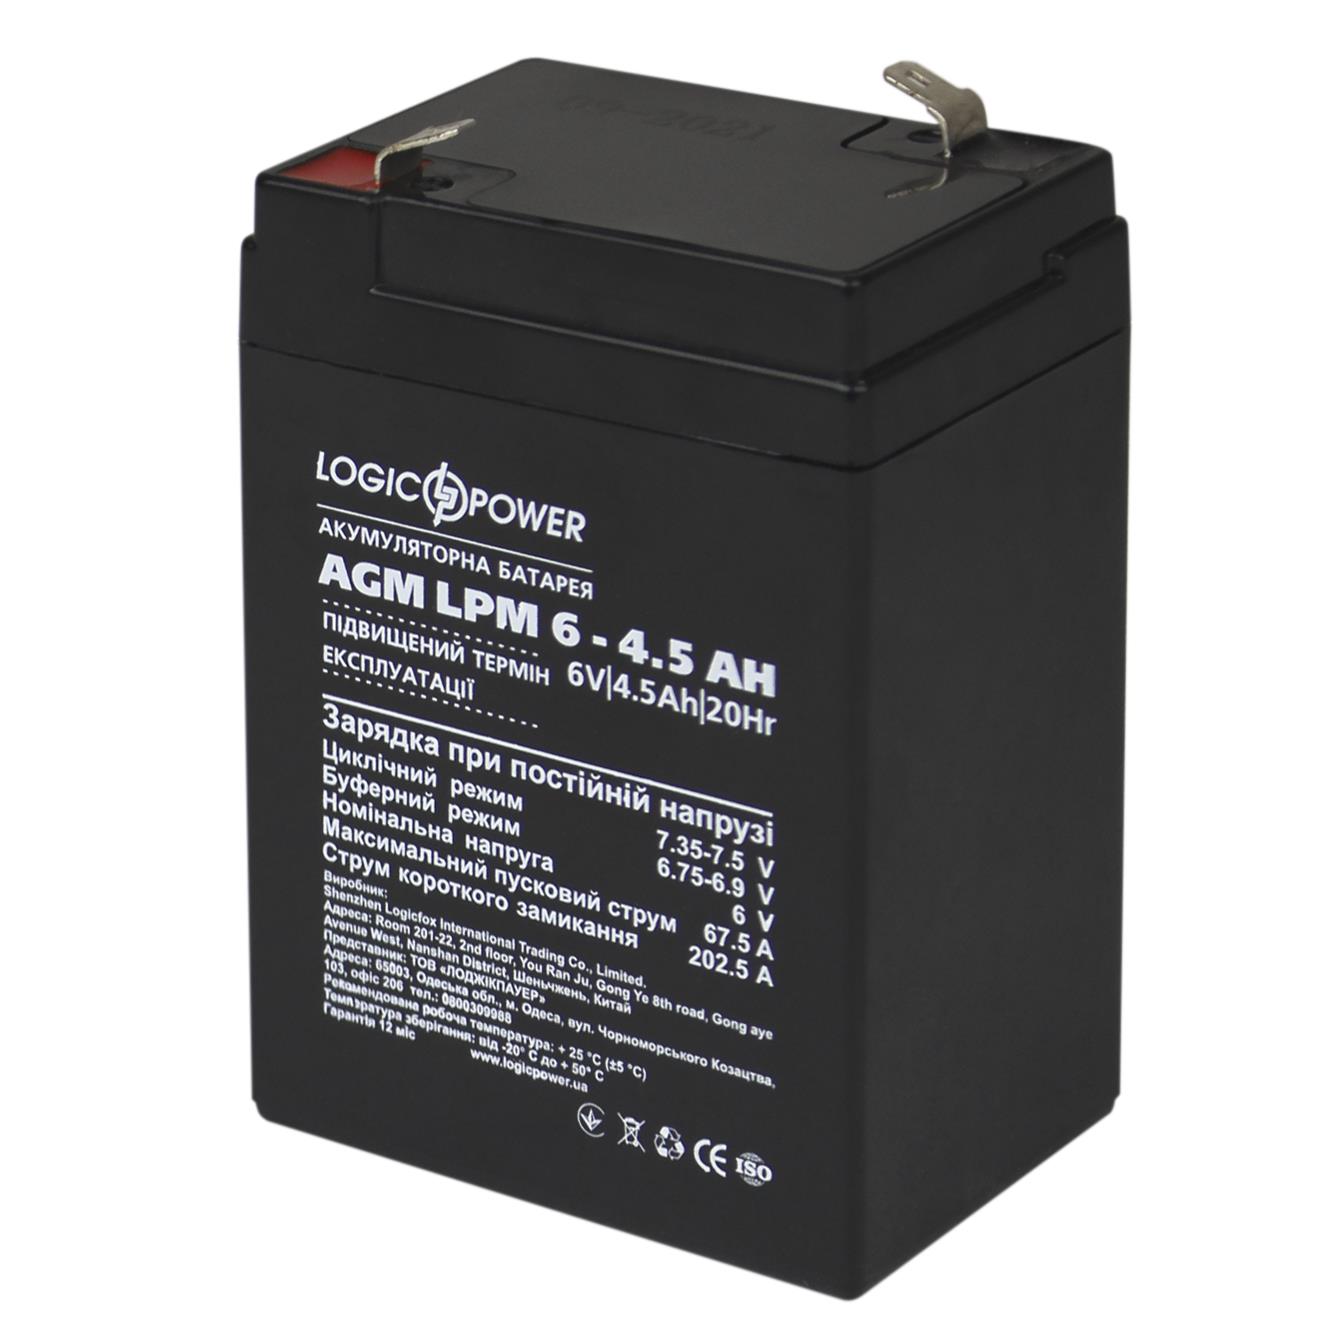 LogicPower AGM LPM 6V - 4.5 Ah (3860)